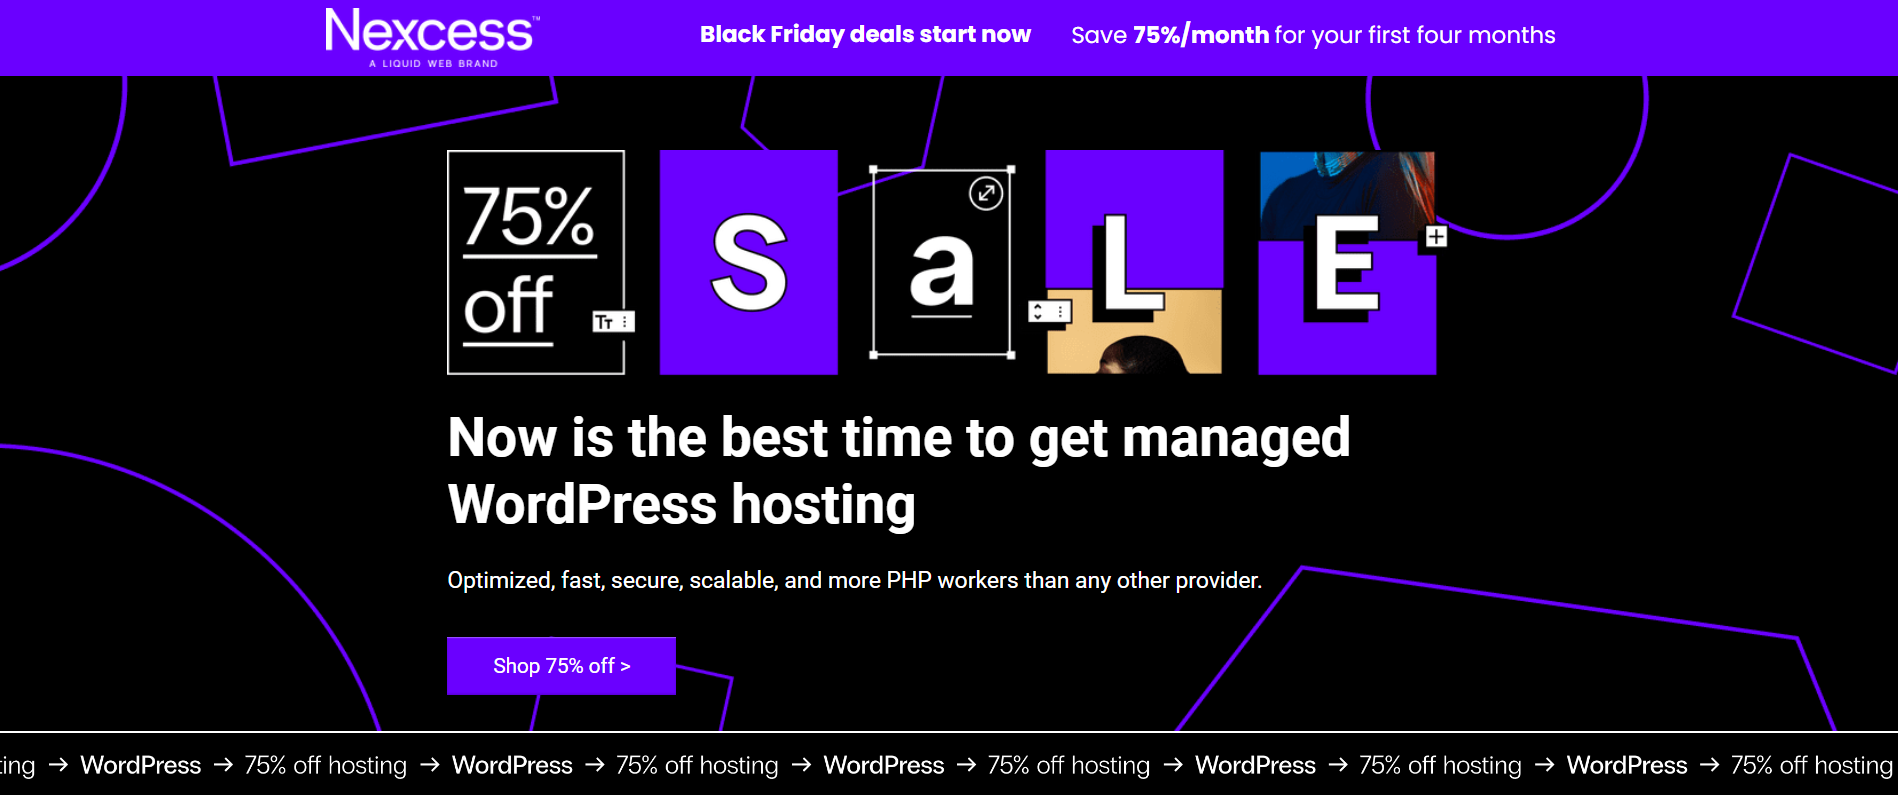 Nexcess Black Friday Pagina met WordPress-deals